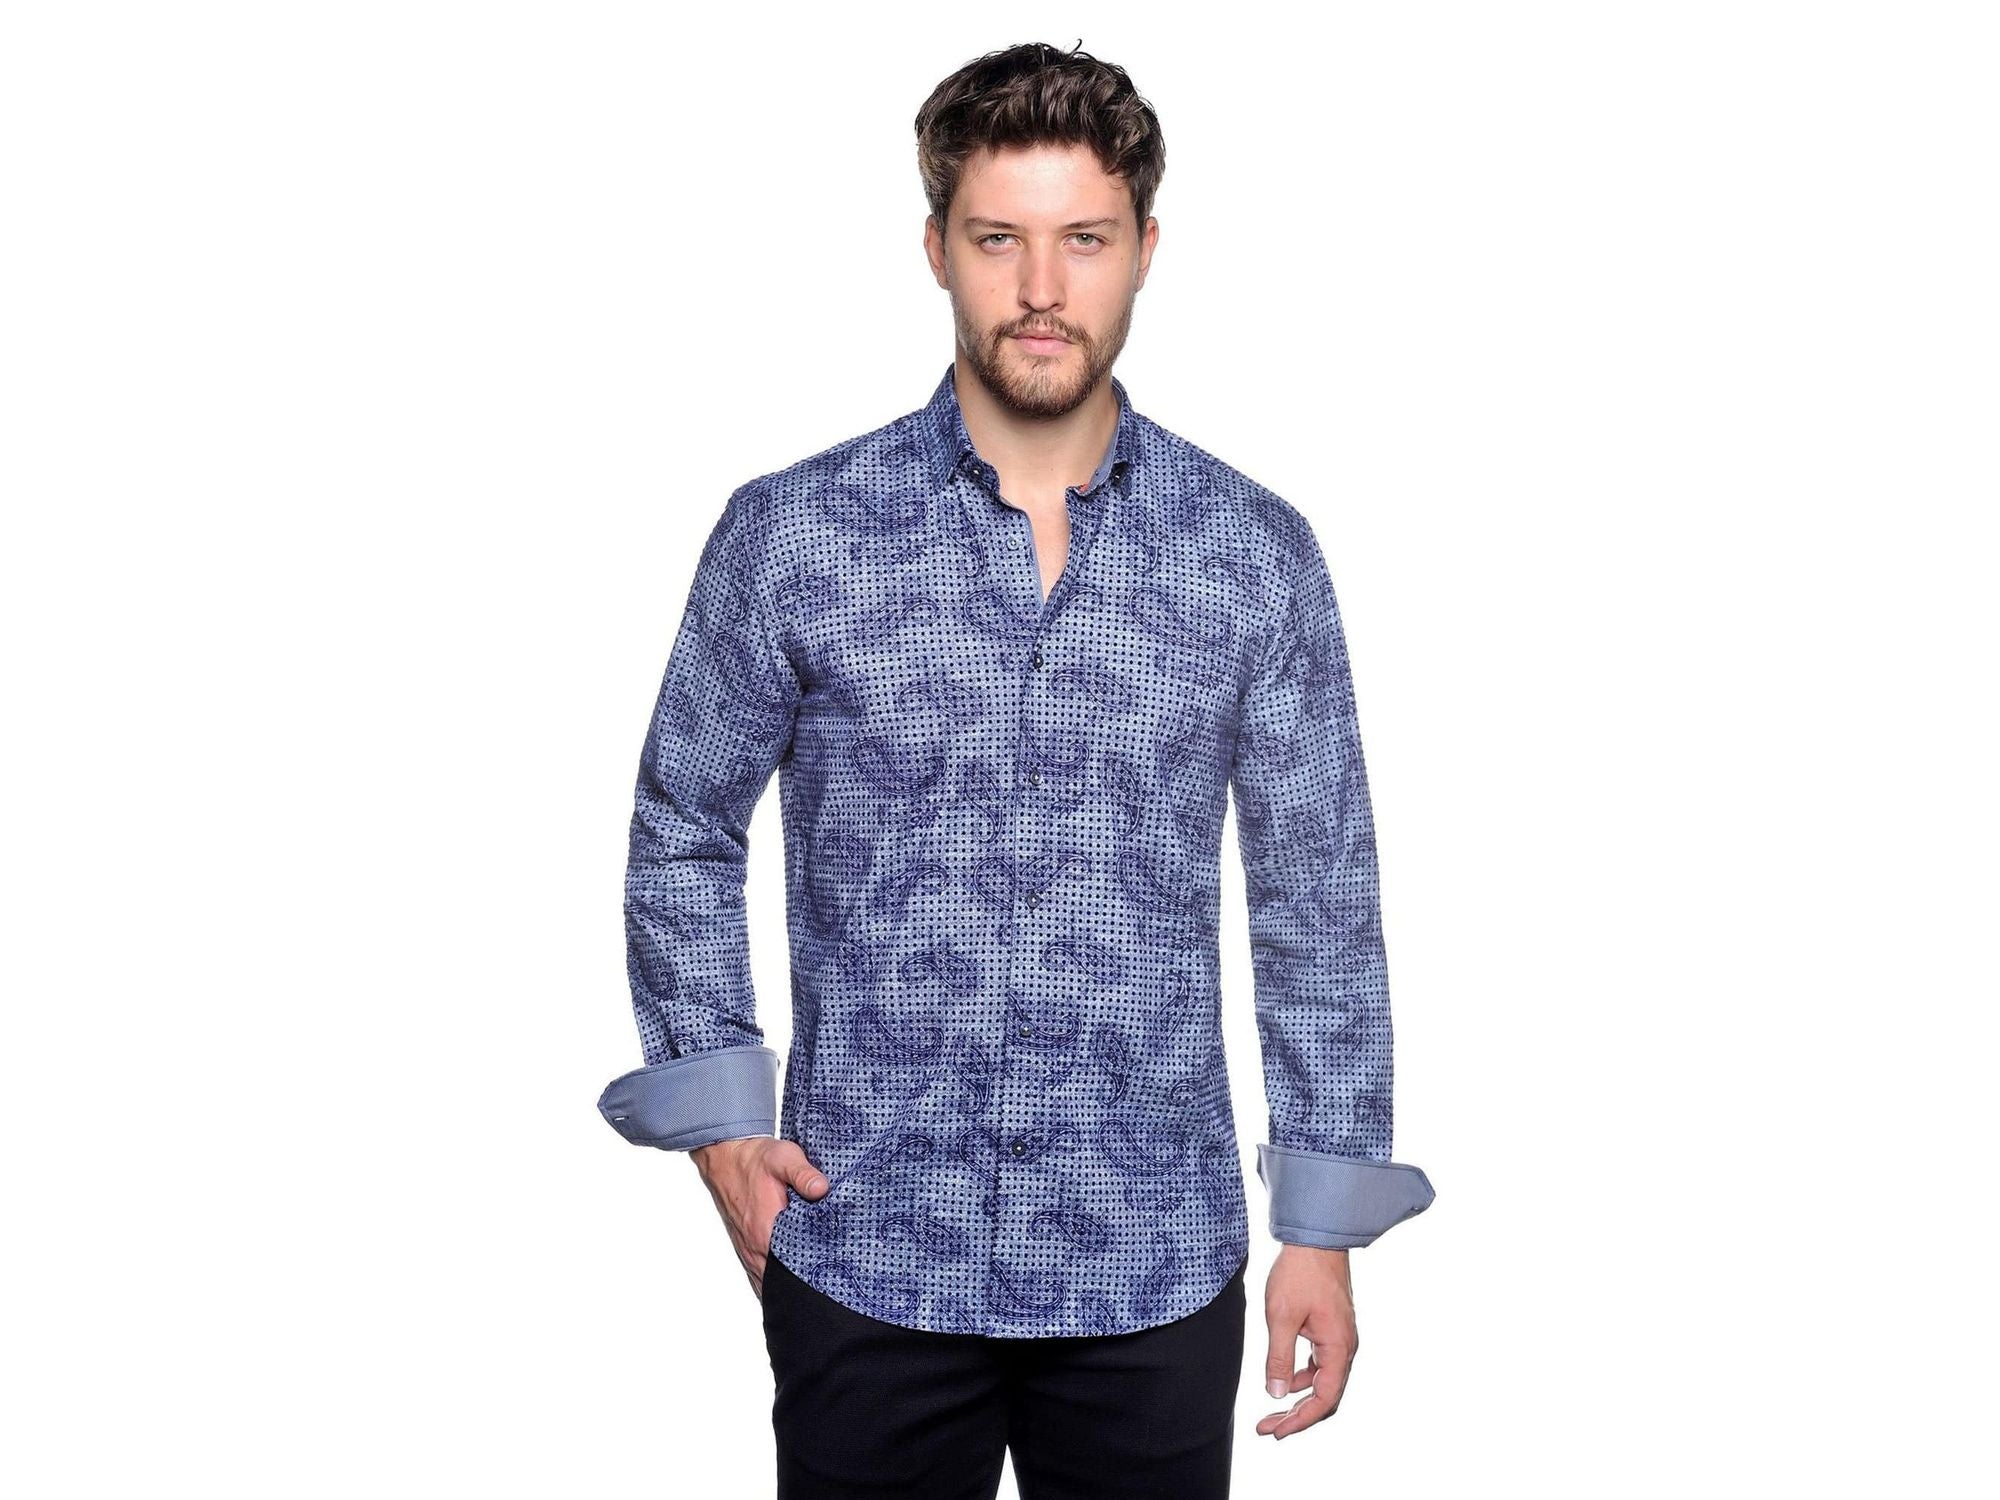 Mizumi Navy Blue Paisley Flocked Print Sport Shirt - Rainwater's Men's Clothing and Tuxedo Rental